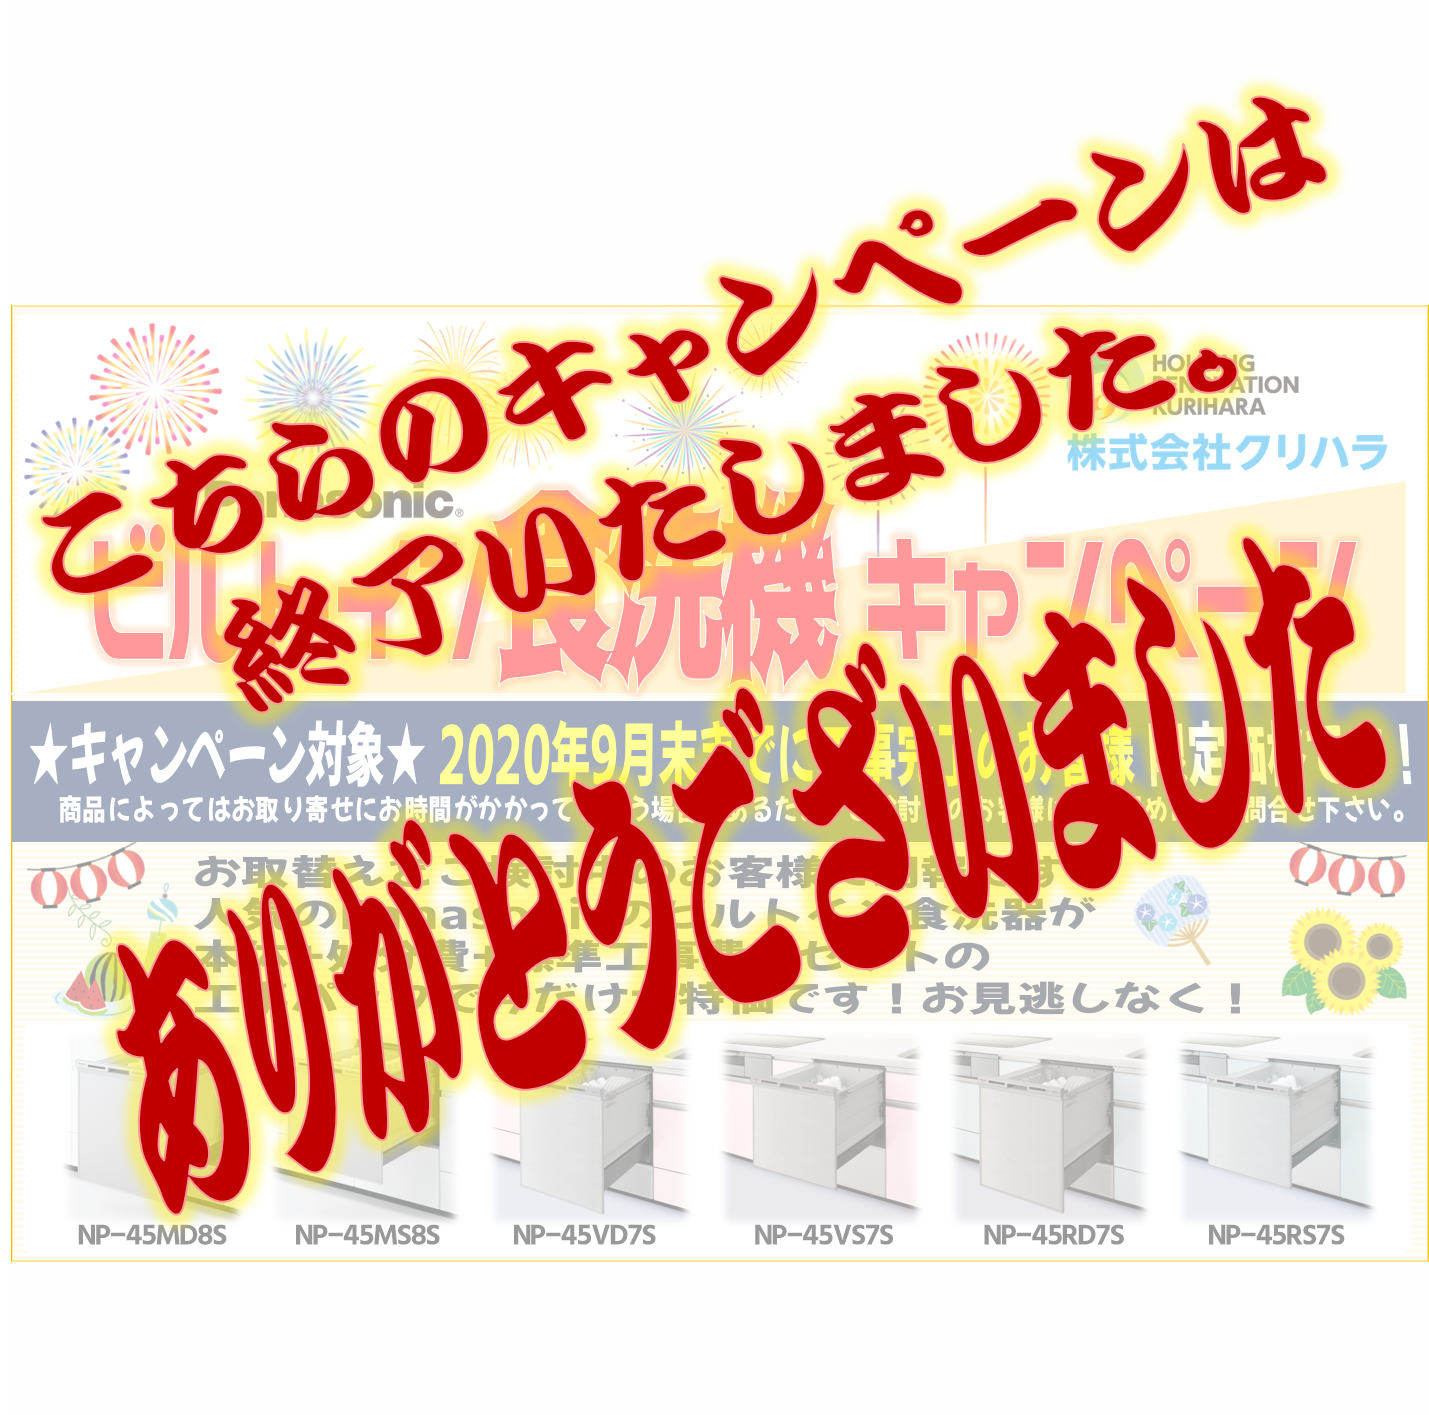 Panasonic ビルトイン食洗機キャンペーン♪ | 株式会社クリハラ